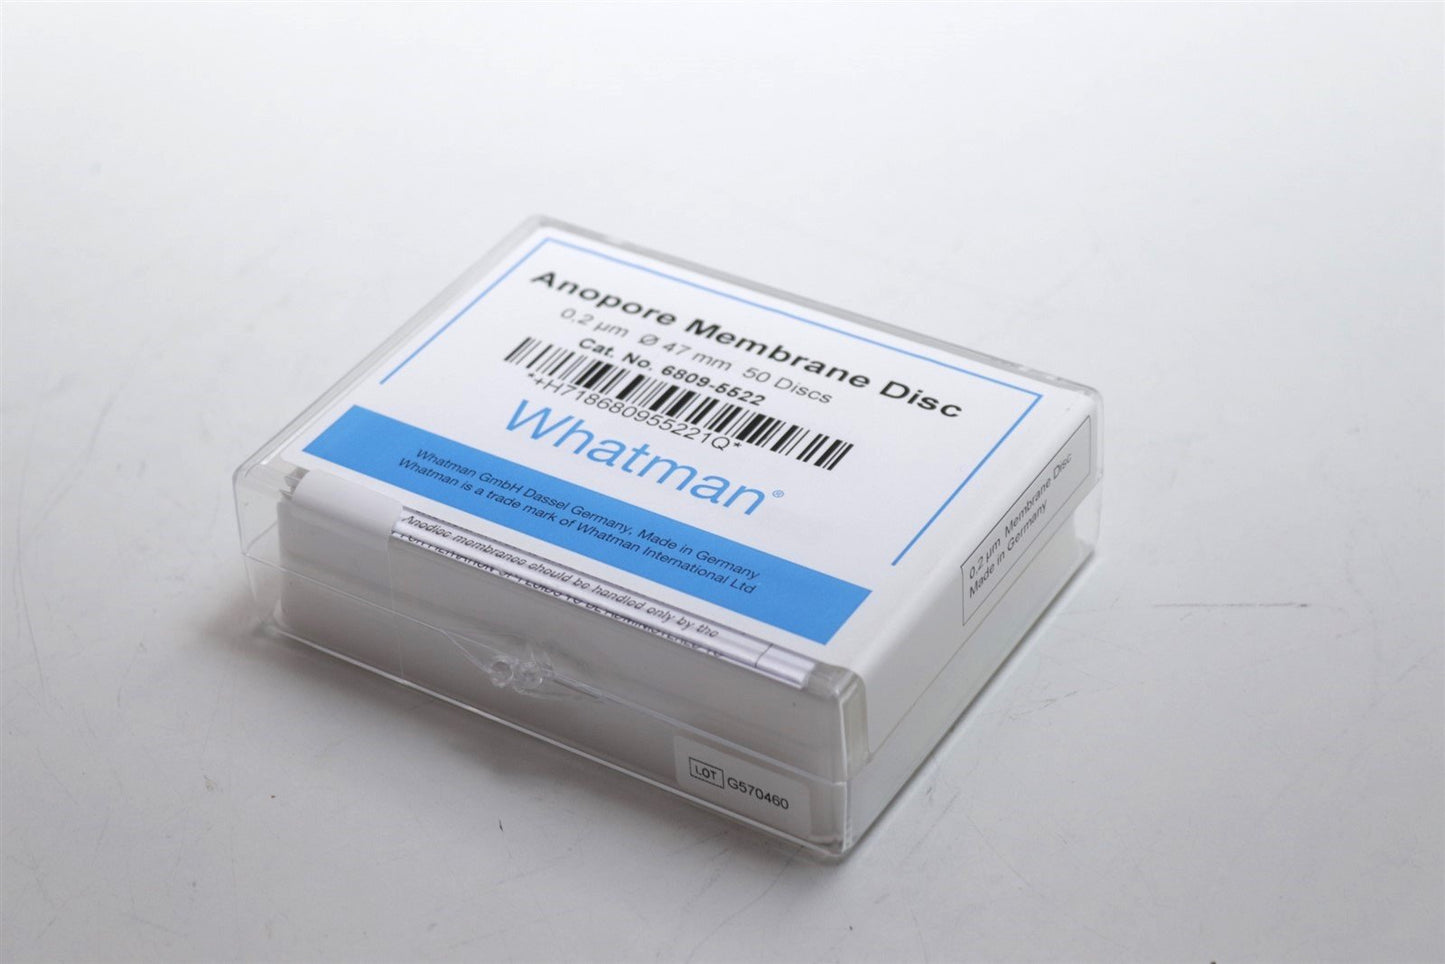 New Whatman Anopore Membrane Disc Filters Membrane 0.2um 47mm 50discs 6809-5522